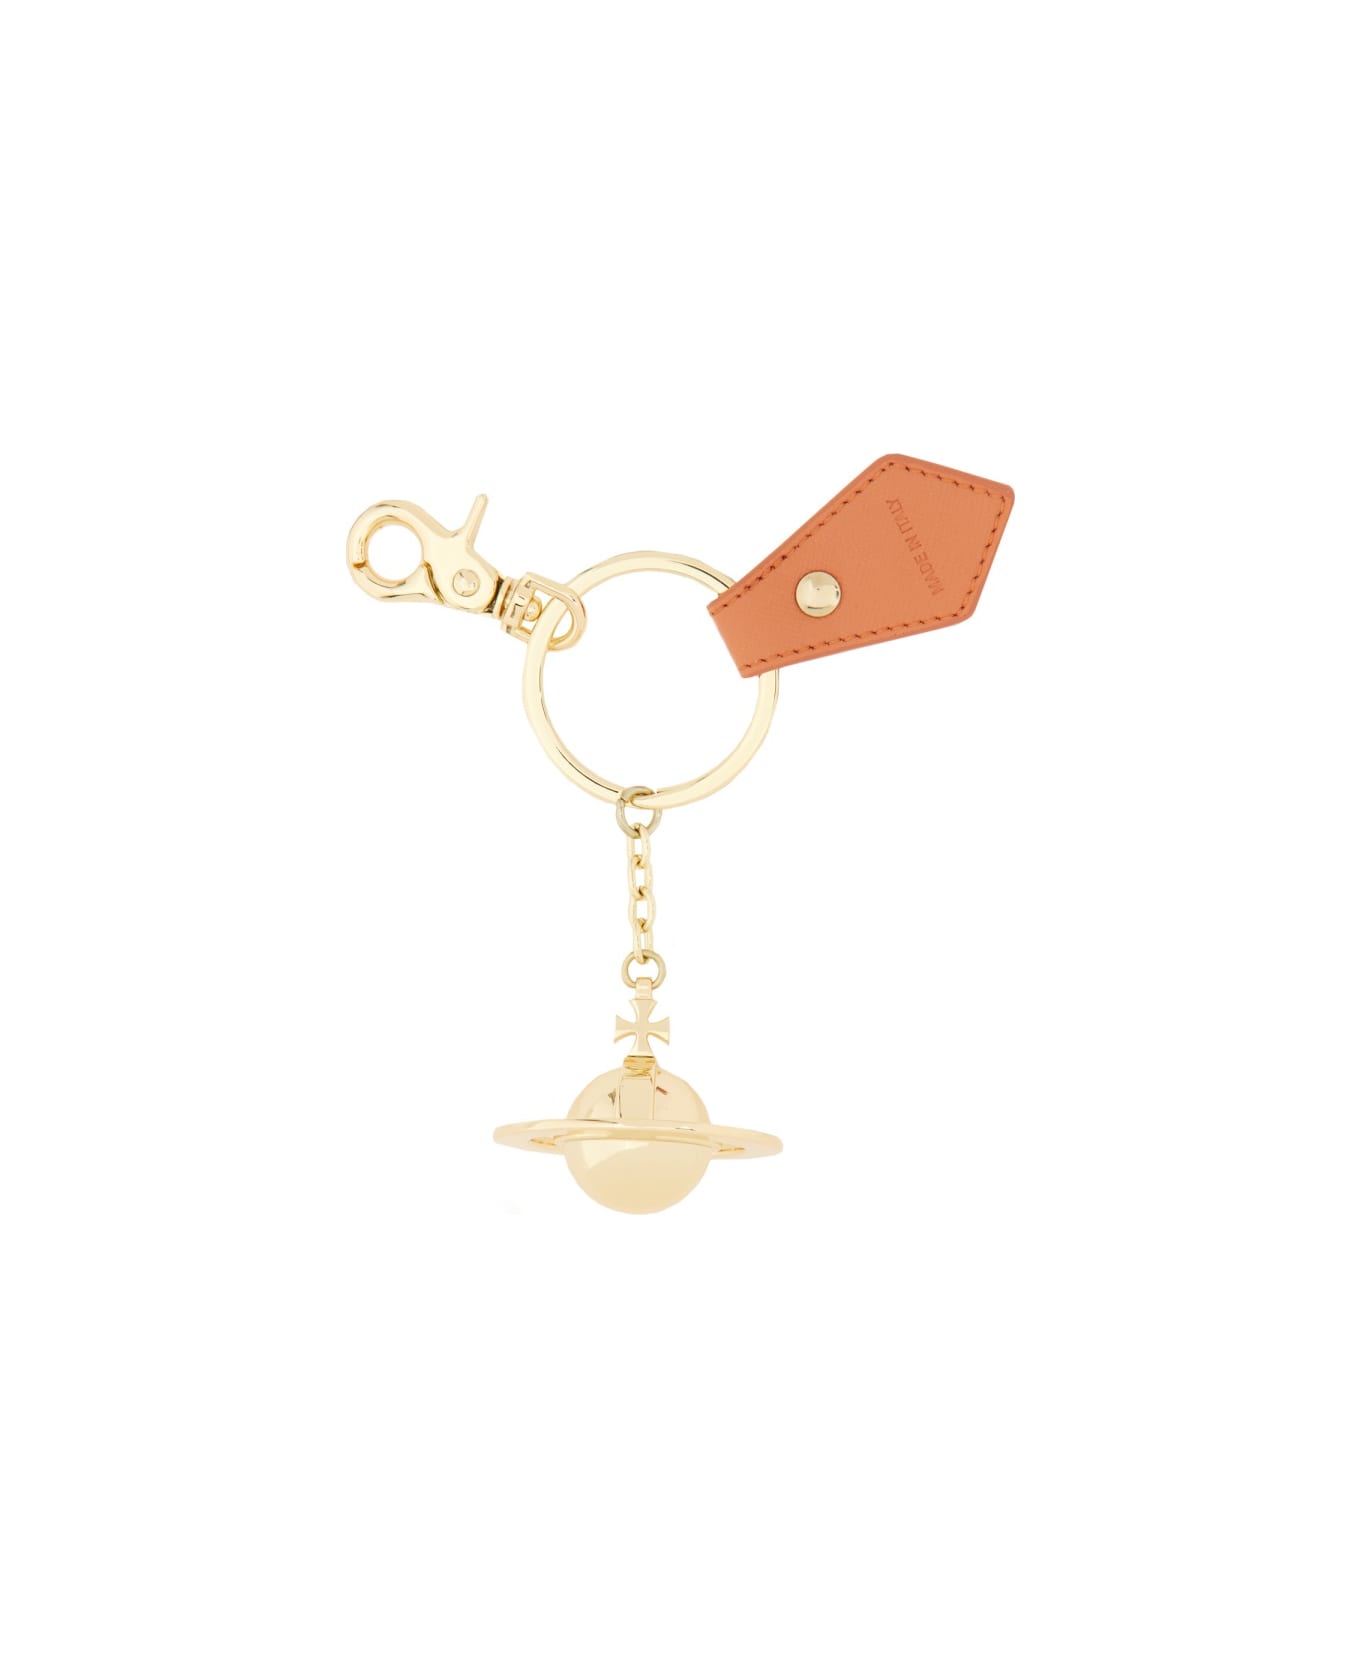 Vivienne Westwood 3d Orb Keychain - GOLD キーリング